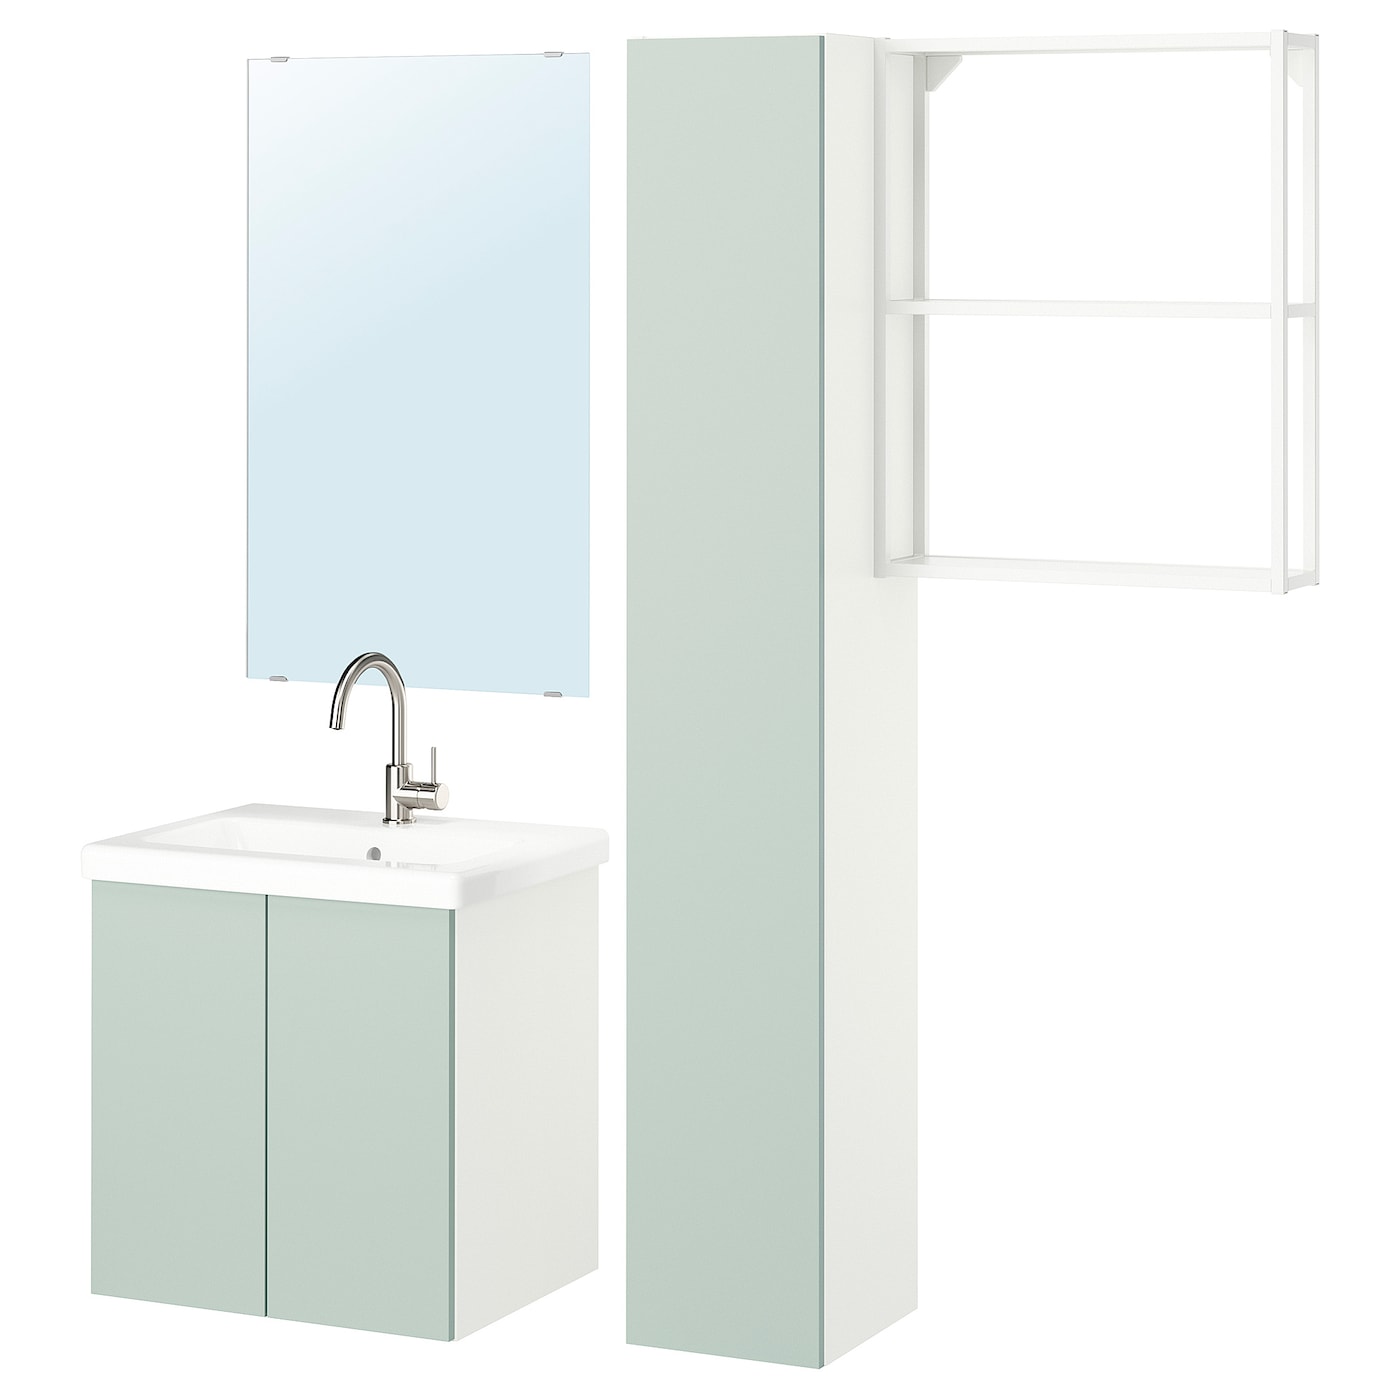 Комбинация для ванной - IKEA ENHET, 64х43х65 см, белый/серо-зеленый, ЭНХЕТ ИКЕА